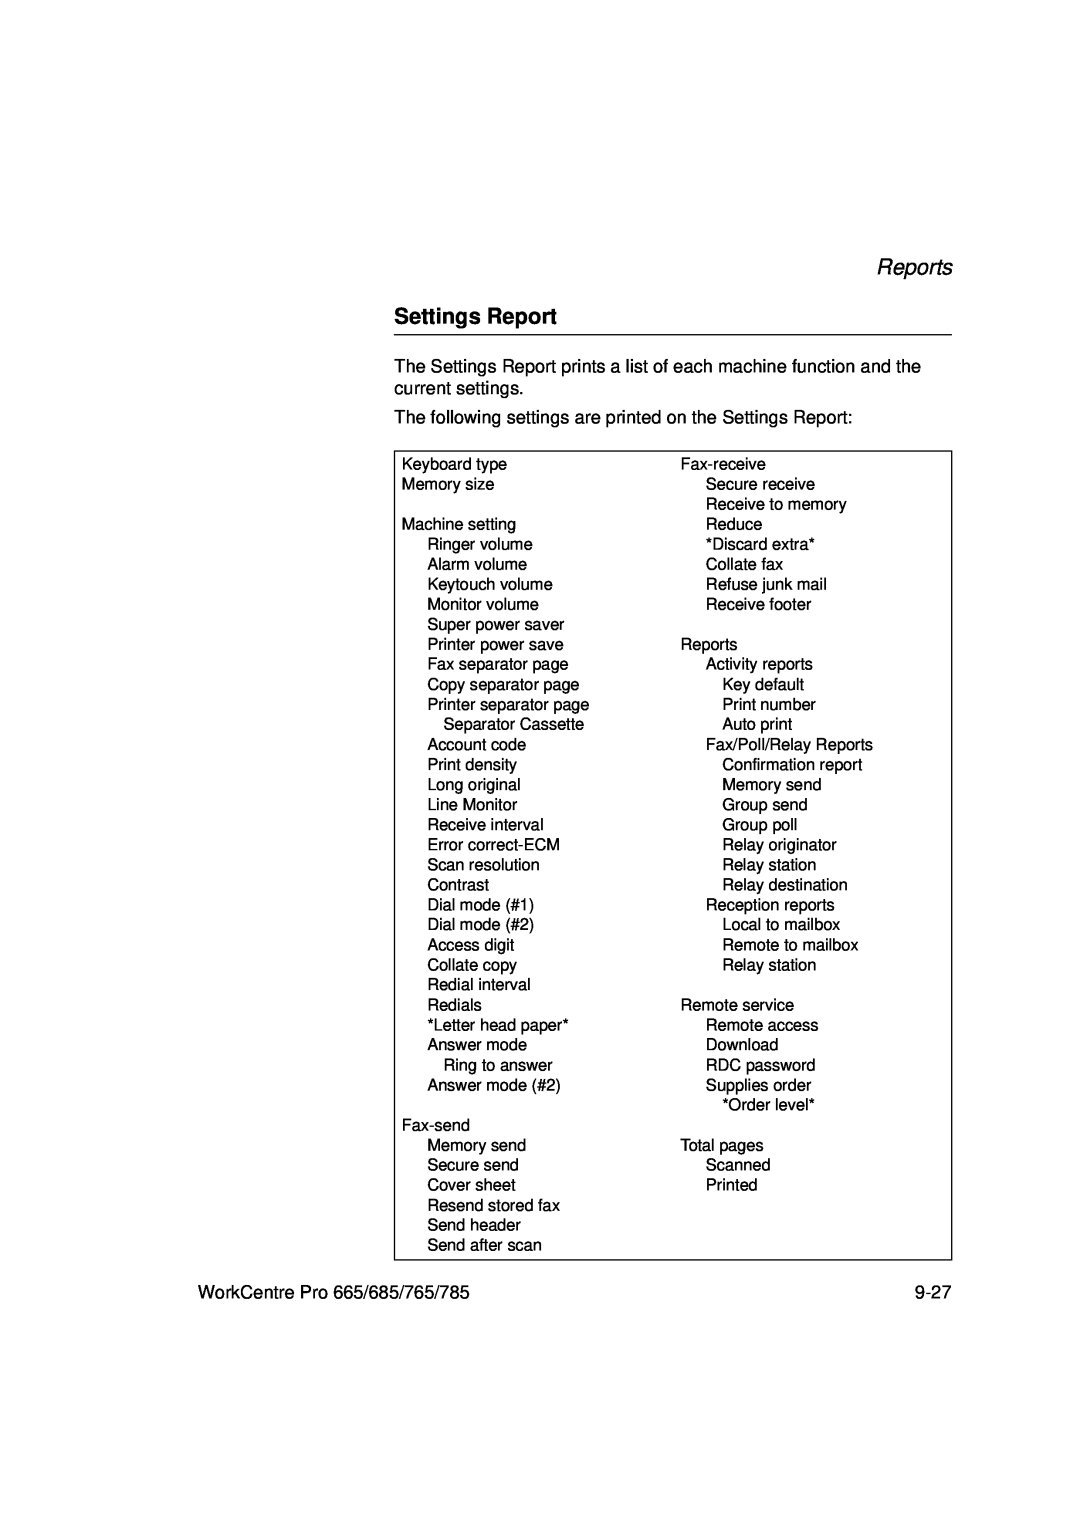 Xerox manual Settings Report, Reports, WorkCentre Pro 665/685/765/785, 9-27 